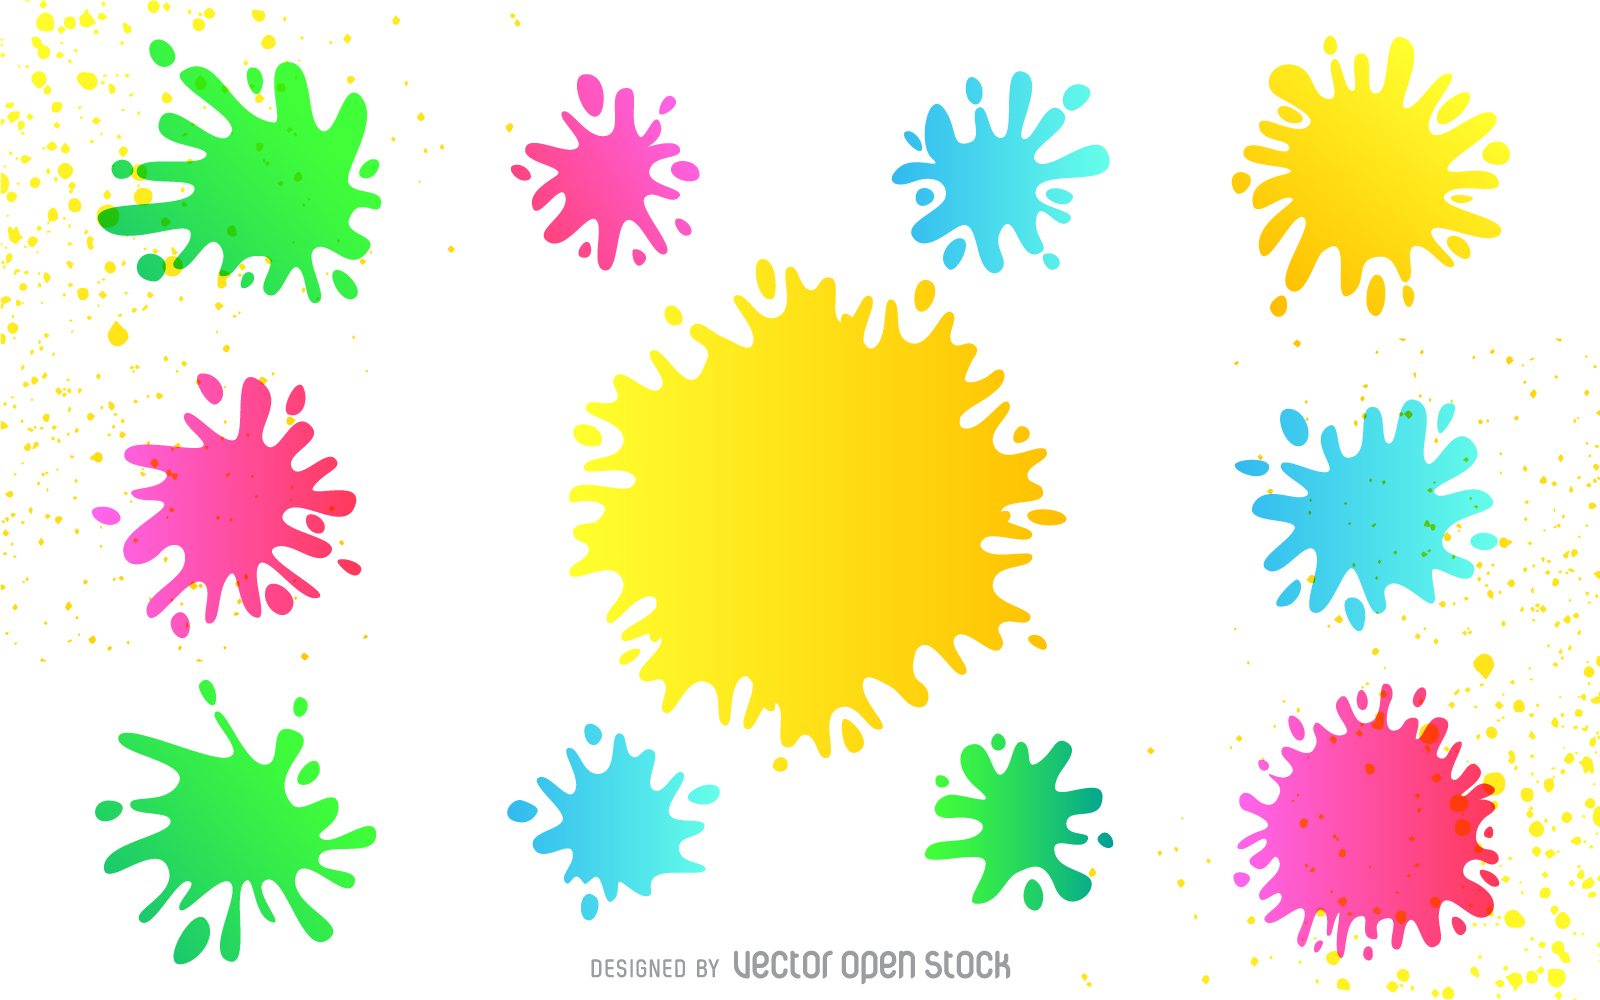 Colorful paint splatter set - Vector download